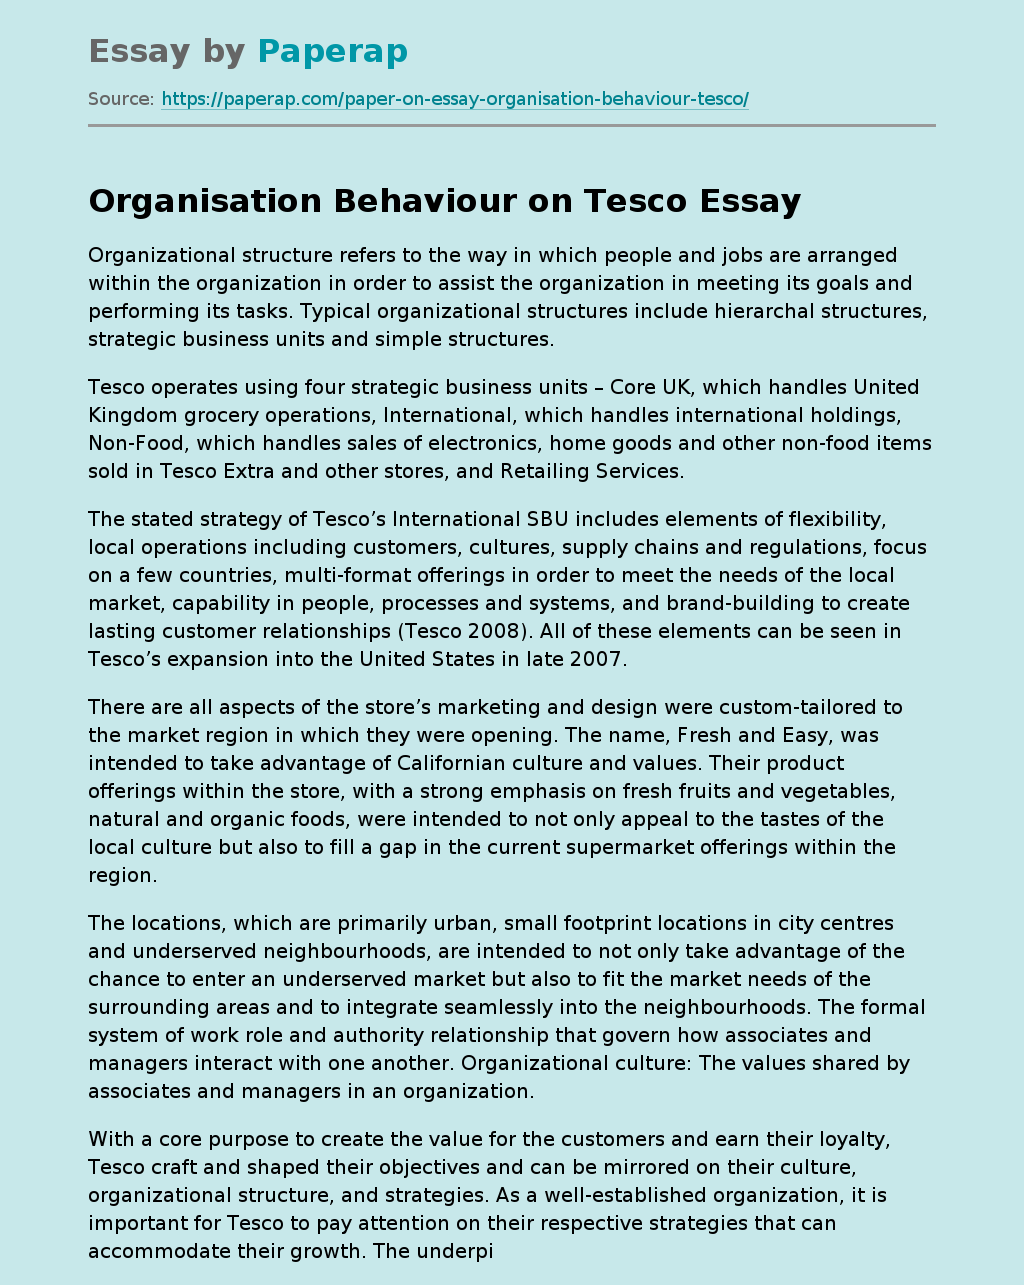 Organisation Behaviour on Tesco: Structure